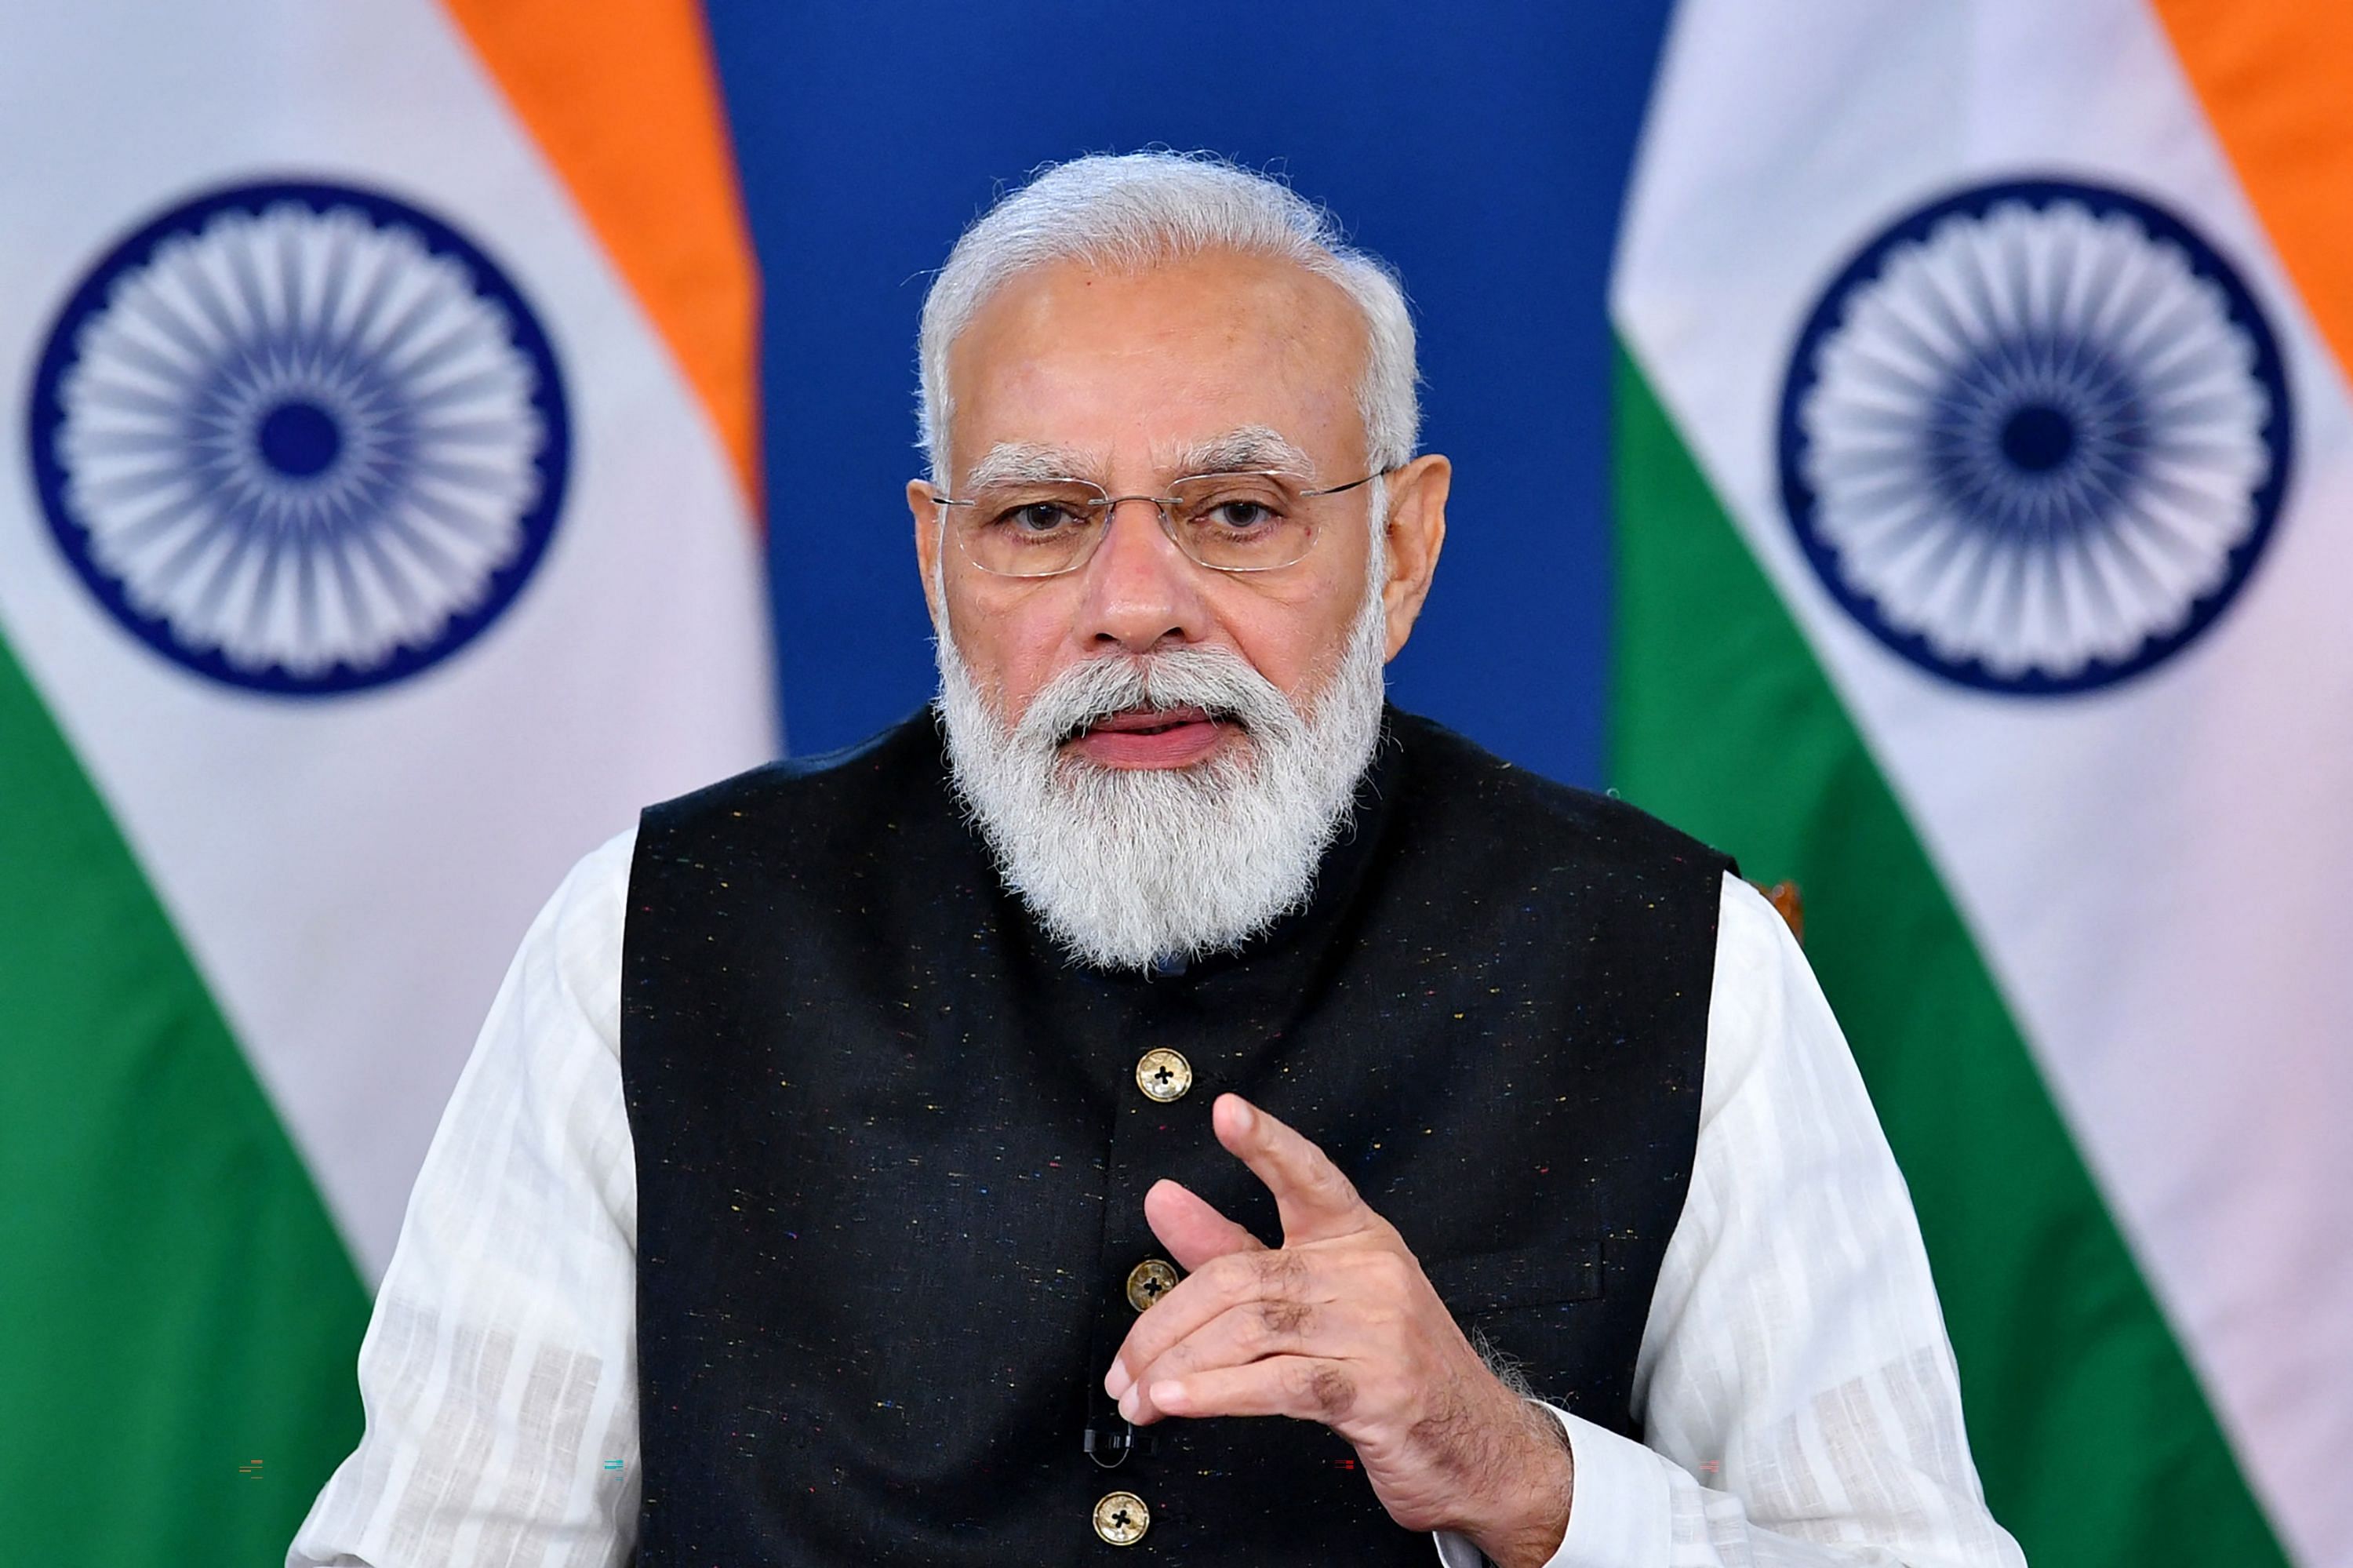 PM Modi. Credit: AFP Photo